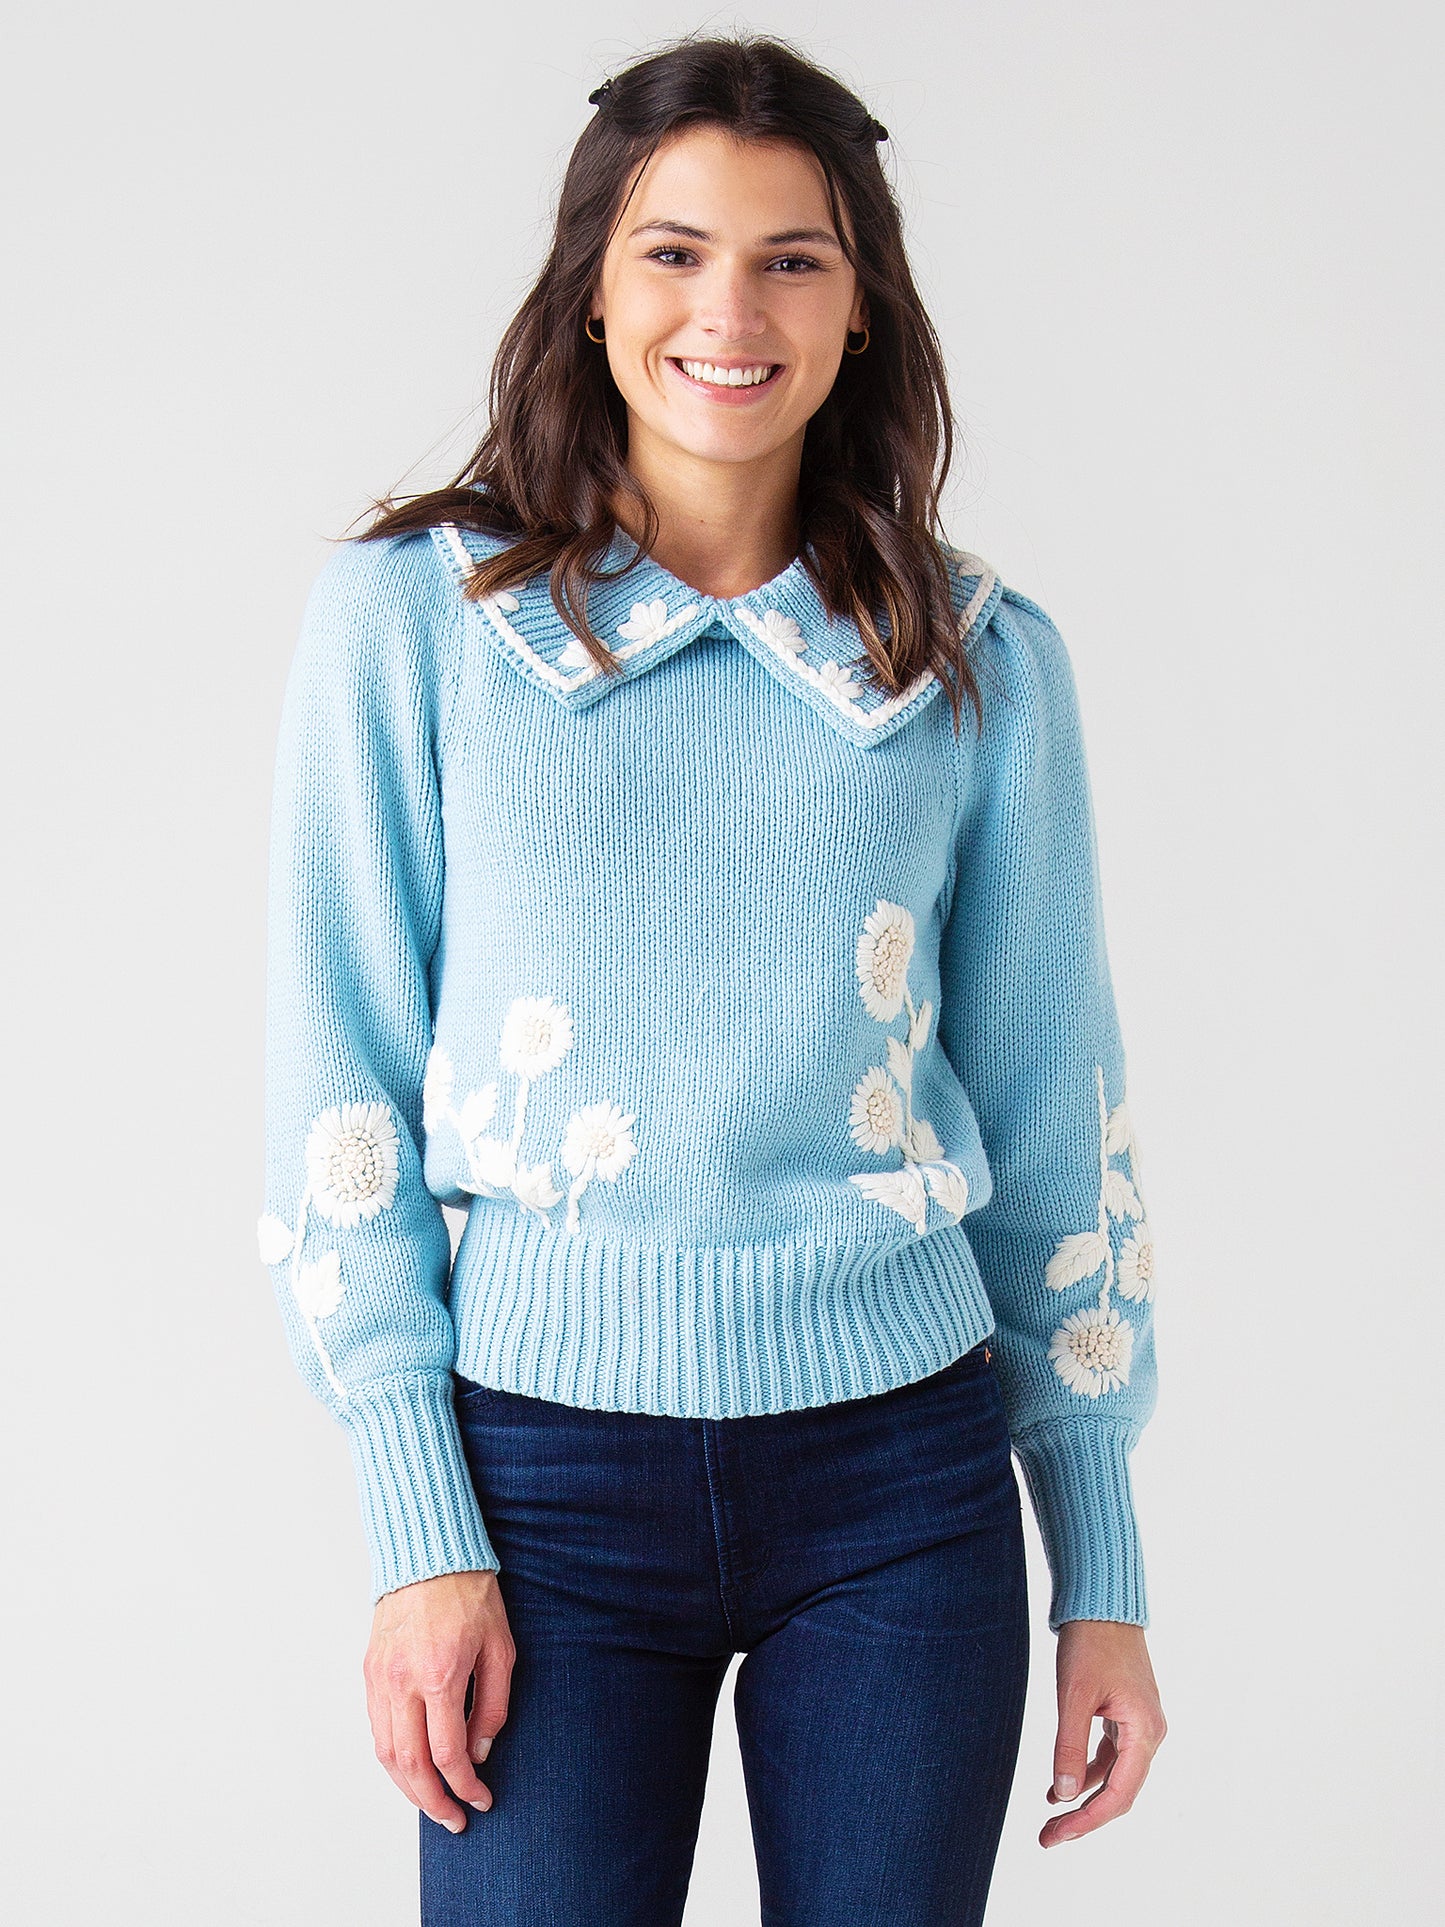 Loveshack Fancy Women's Union Collared Pullover Sweater